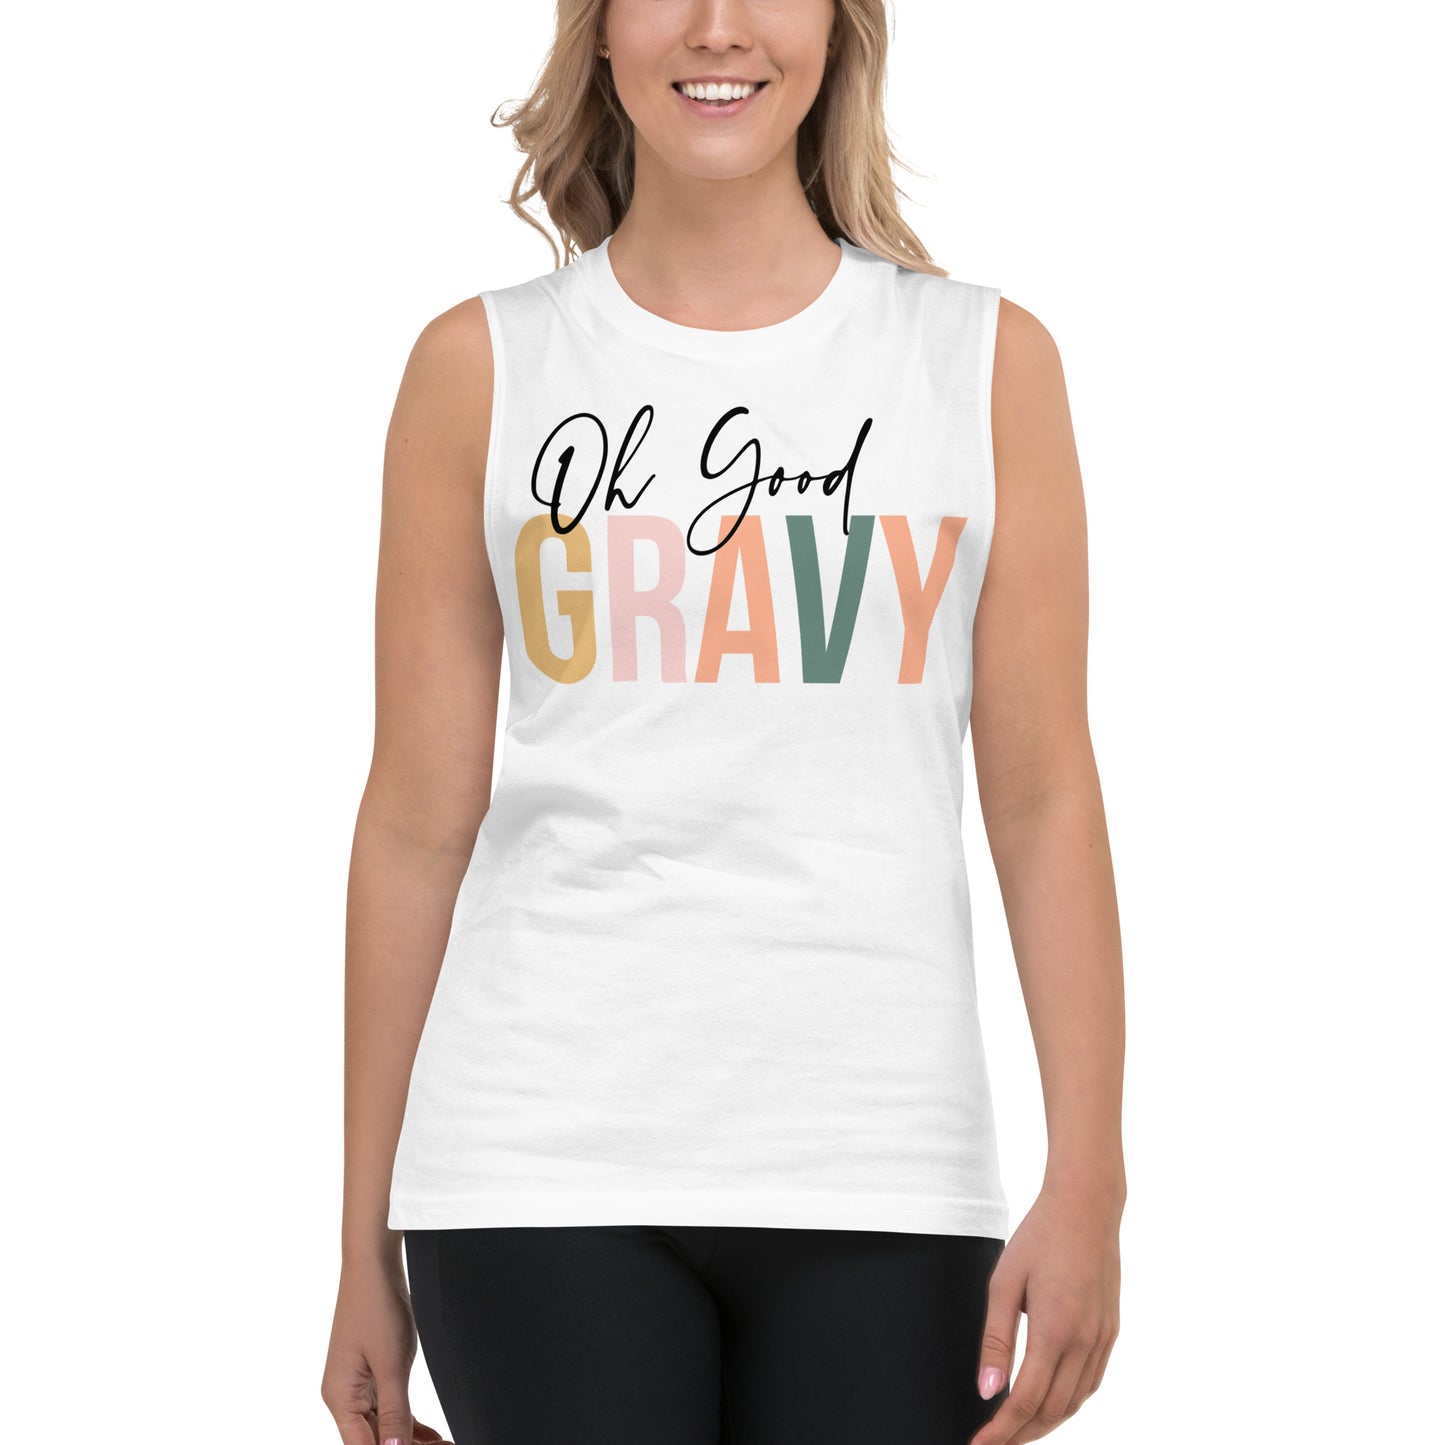 Oh Good Gravy / Unisex Muscle Shirt